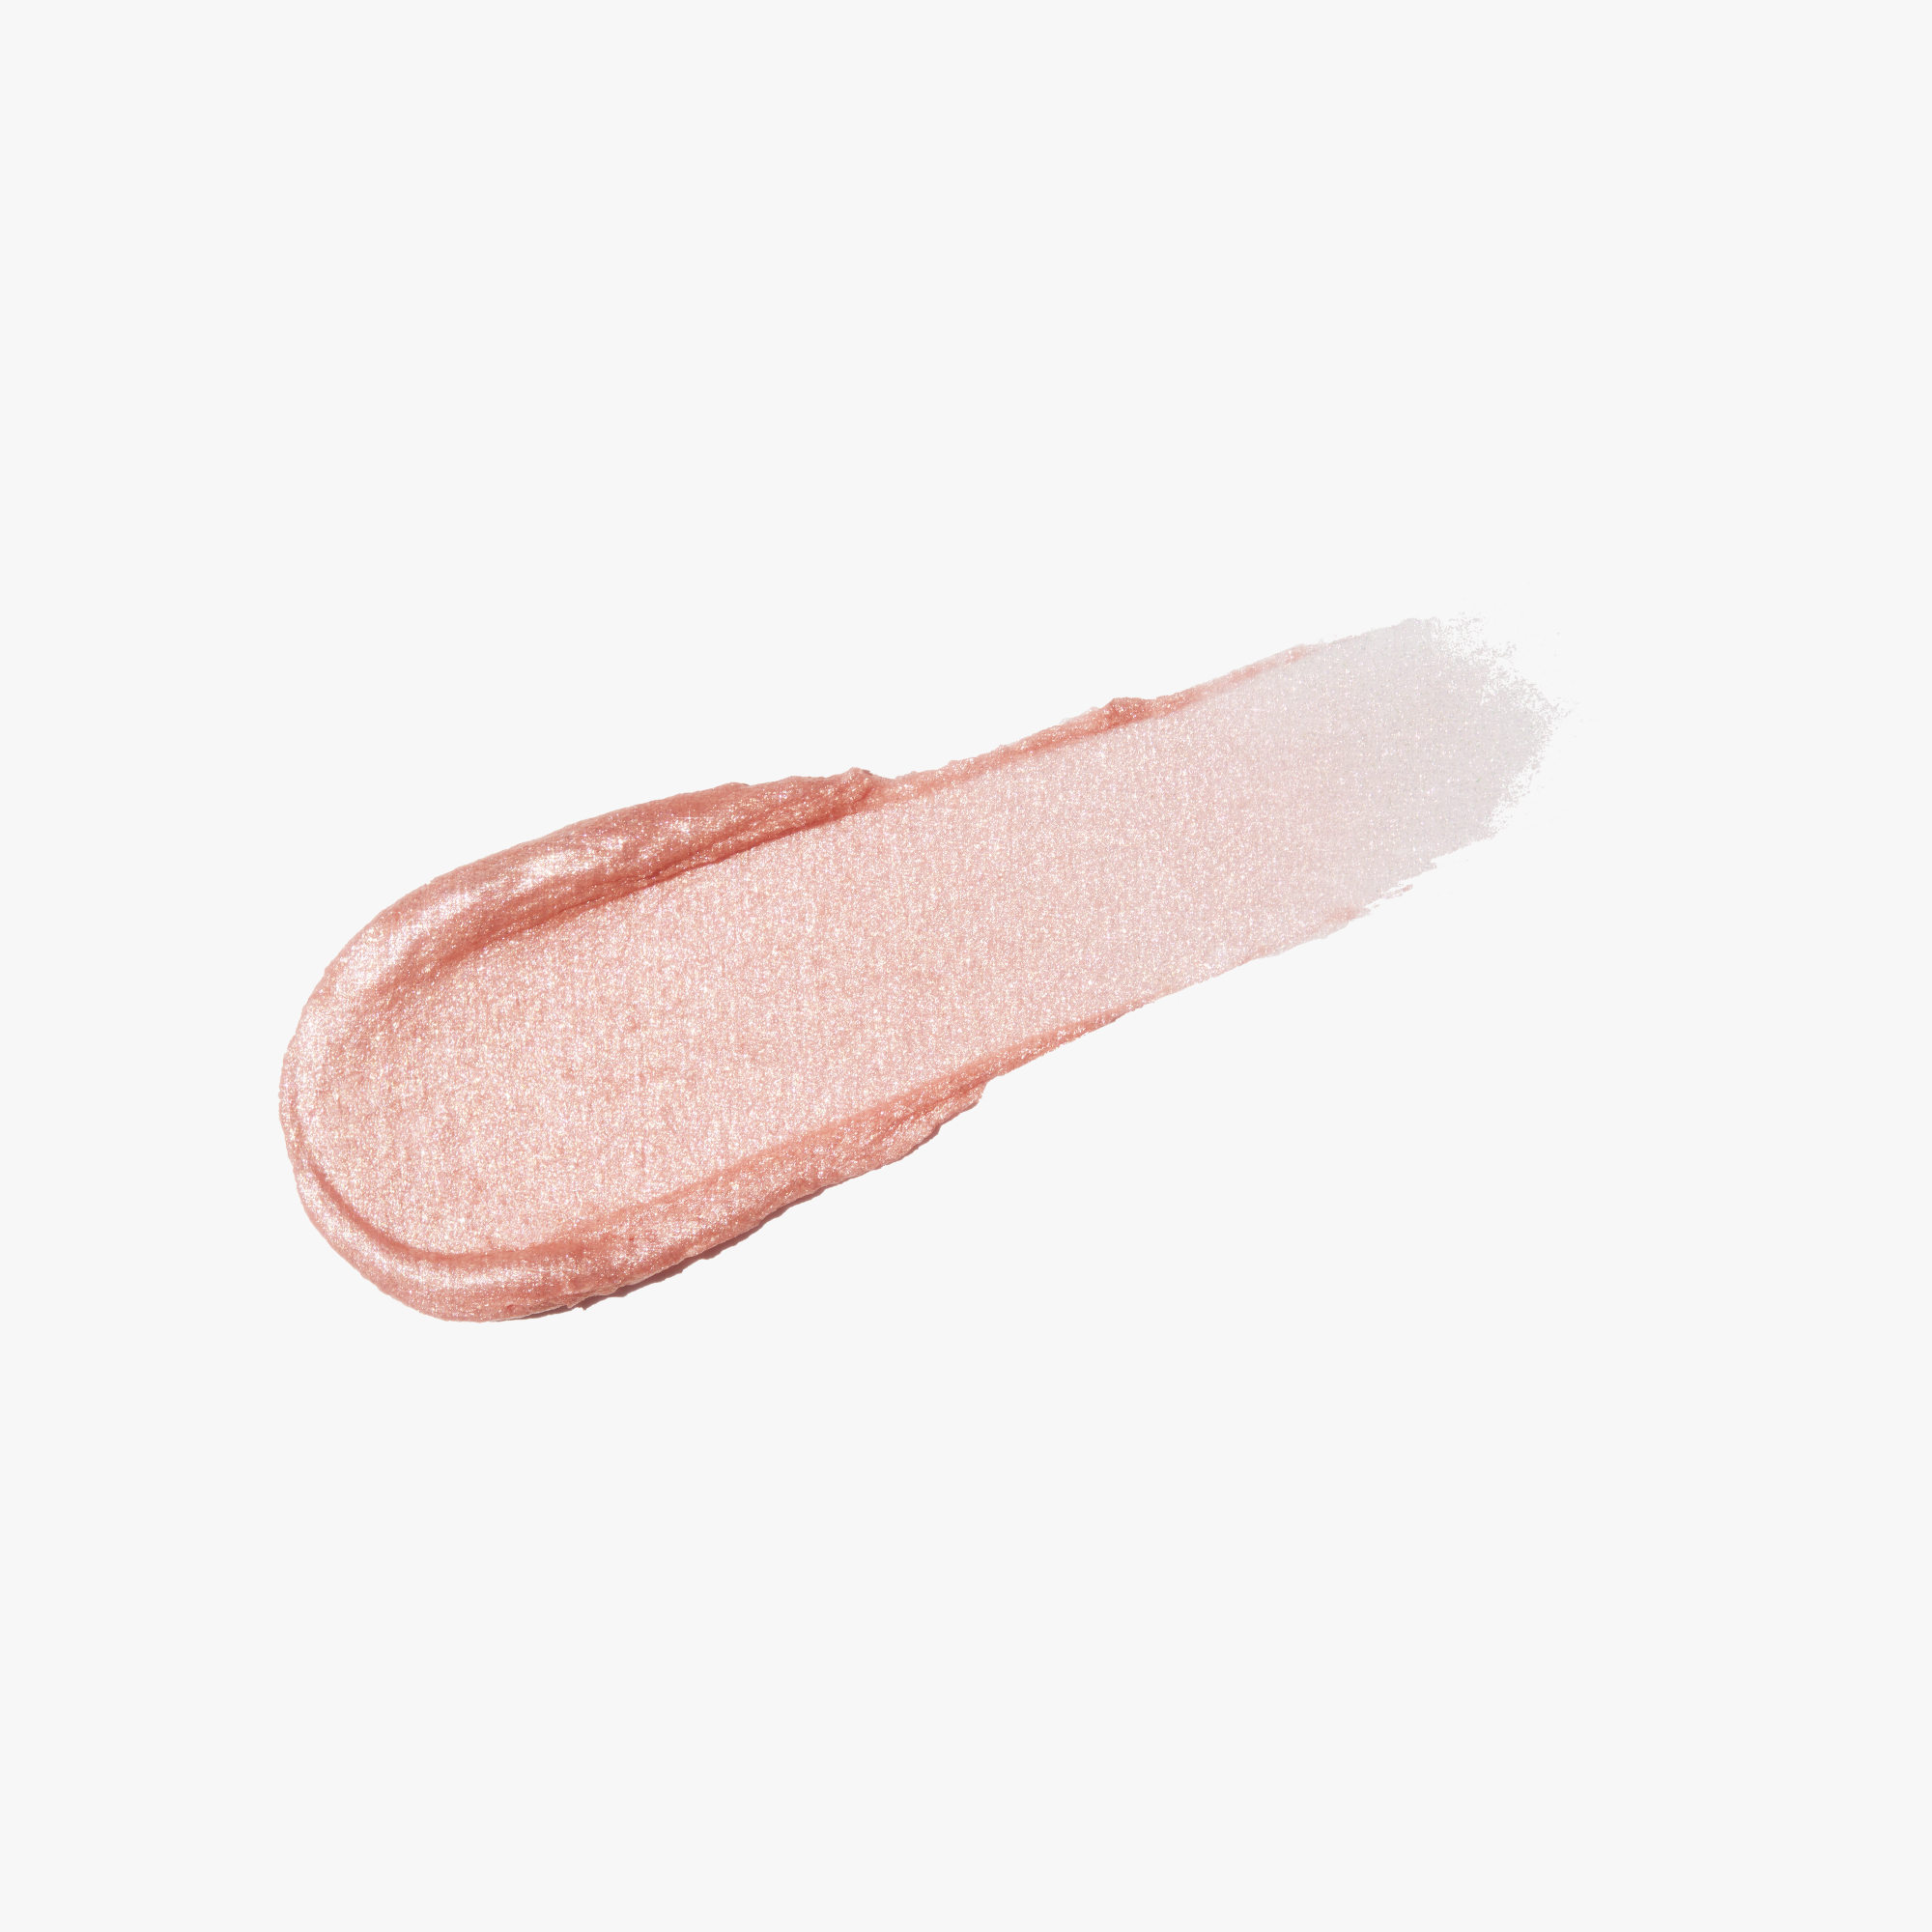 Allure Shine Lustrous Lip Plumper impulse texture image